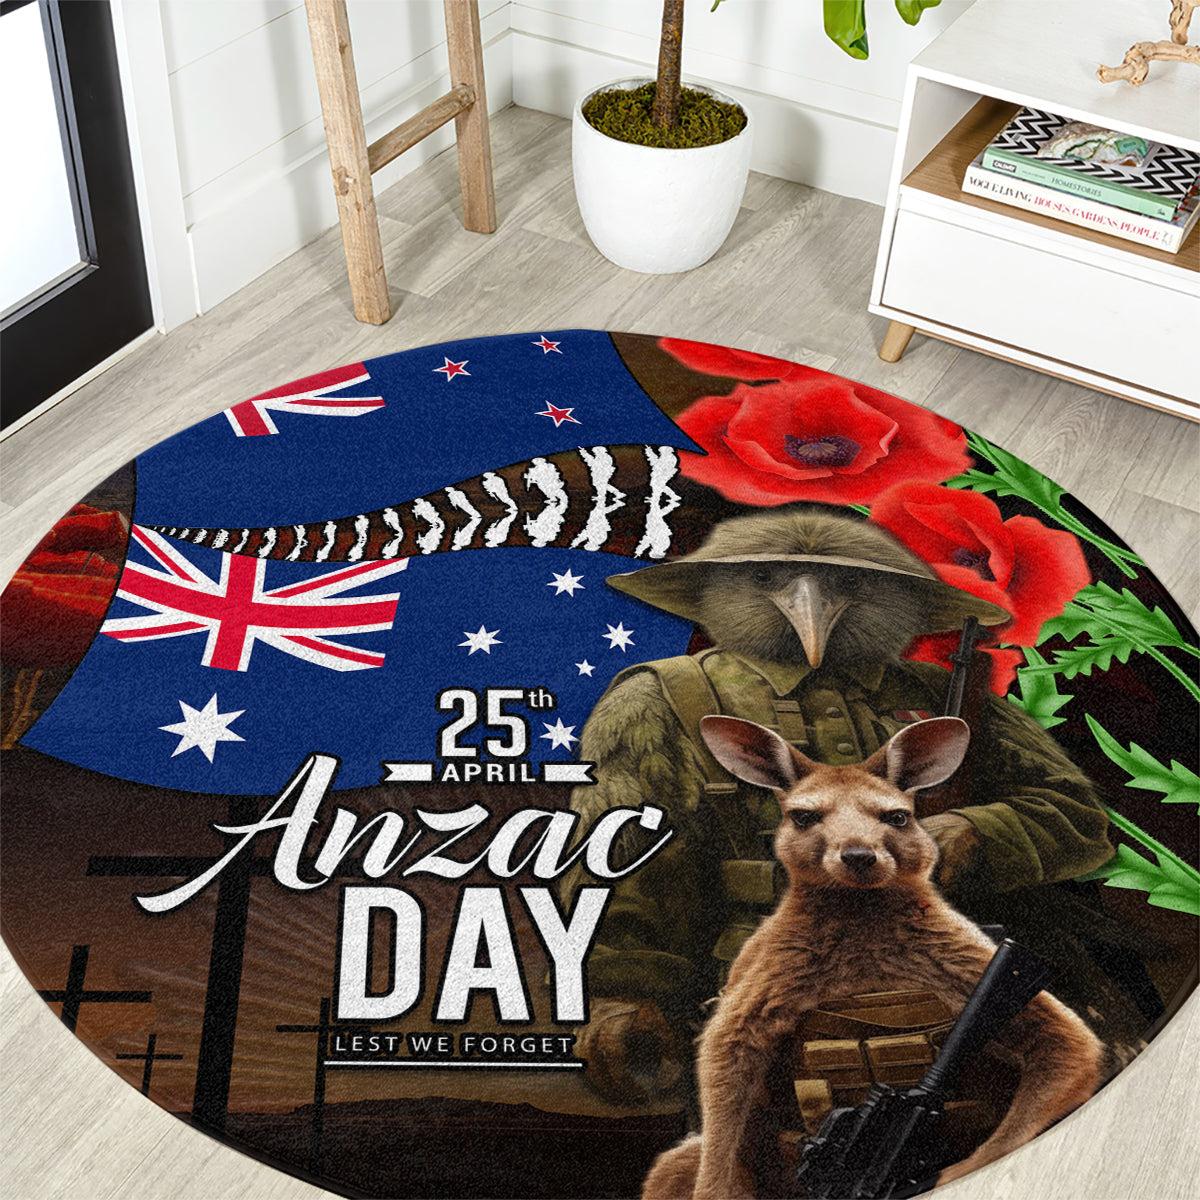 New Zealand and Australia ANZAC Day Round Carpet National Flag mix Kiwi Bird and Kangaroo Soldier Style